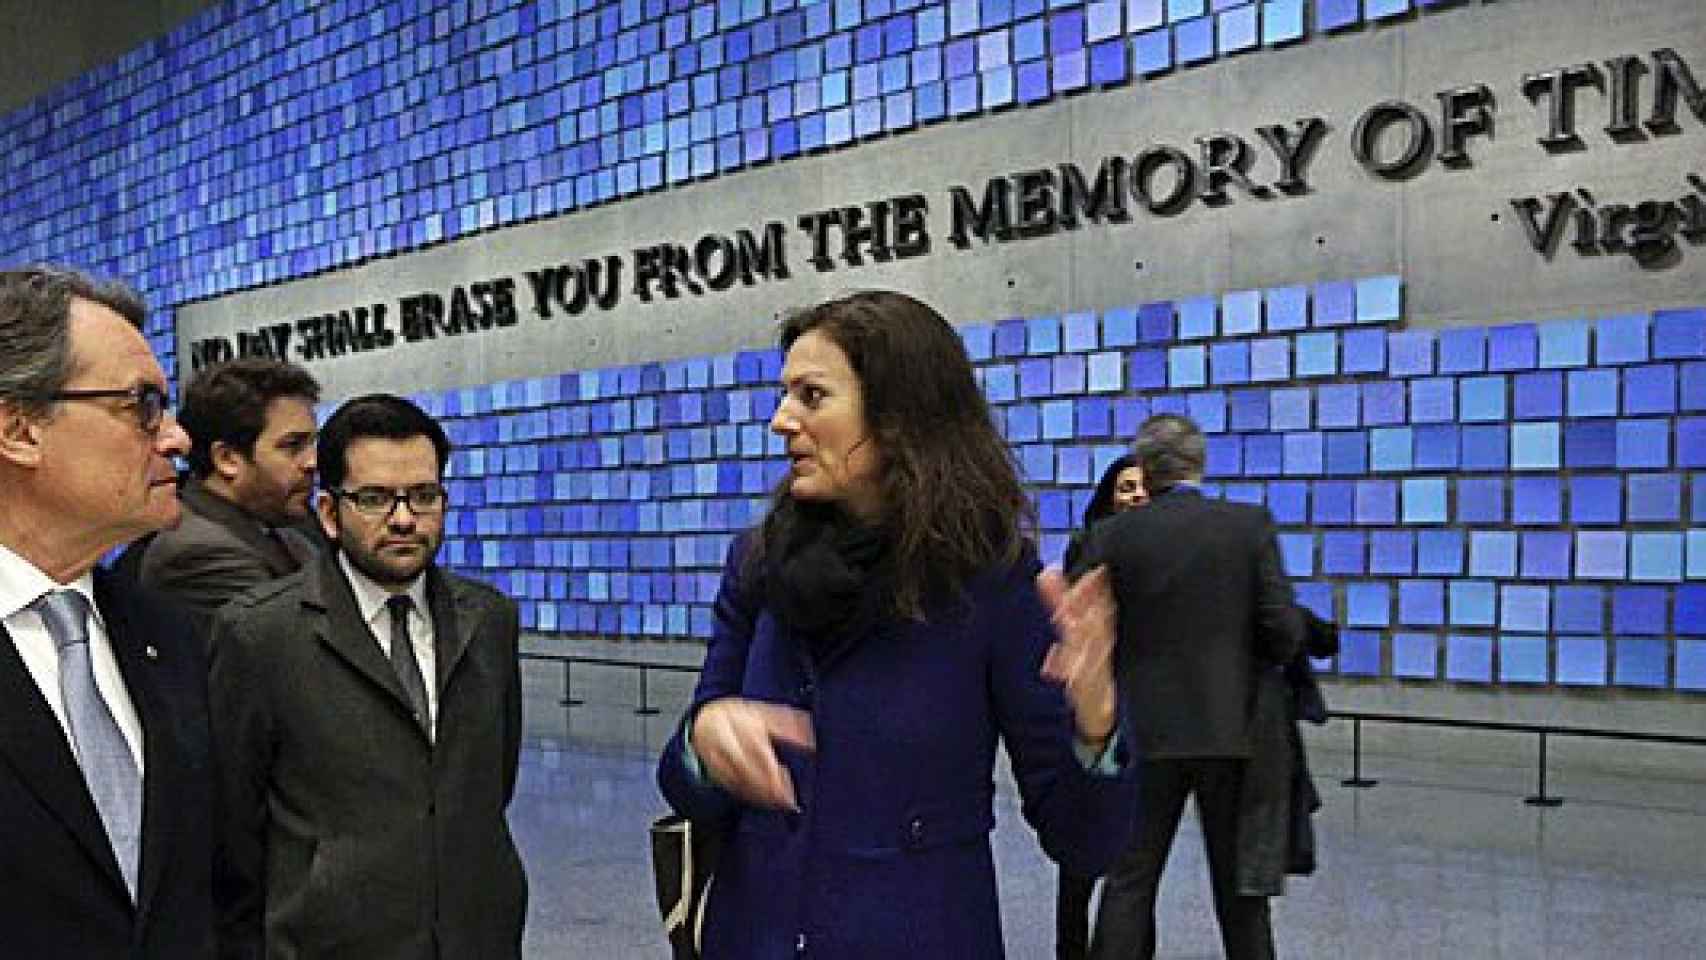 Artur Mas, con la vicepresidenta ejecutiva del Museo 9/11 Memorial de Nueva York, Linn Rasic